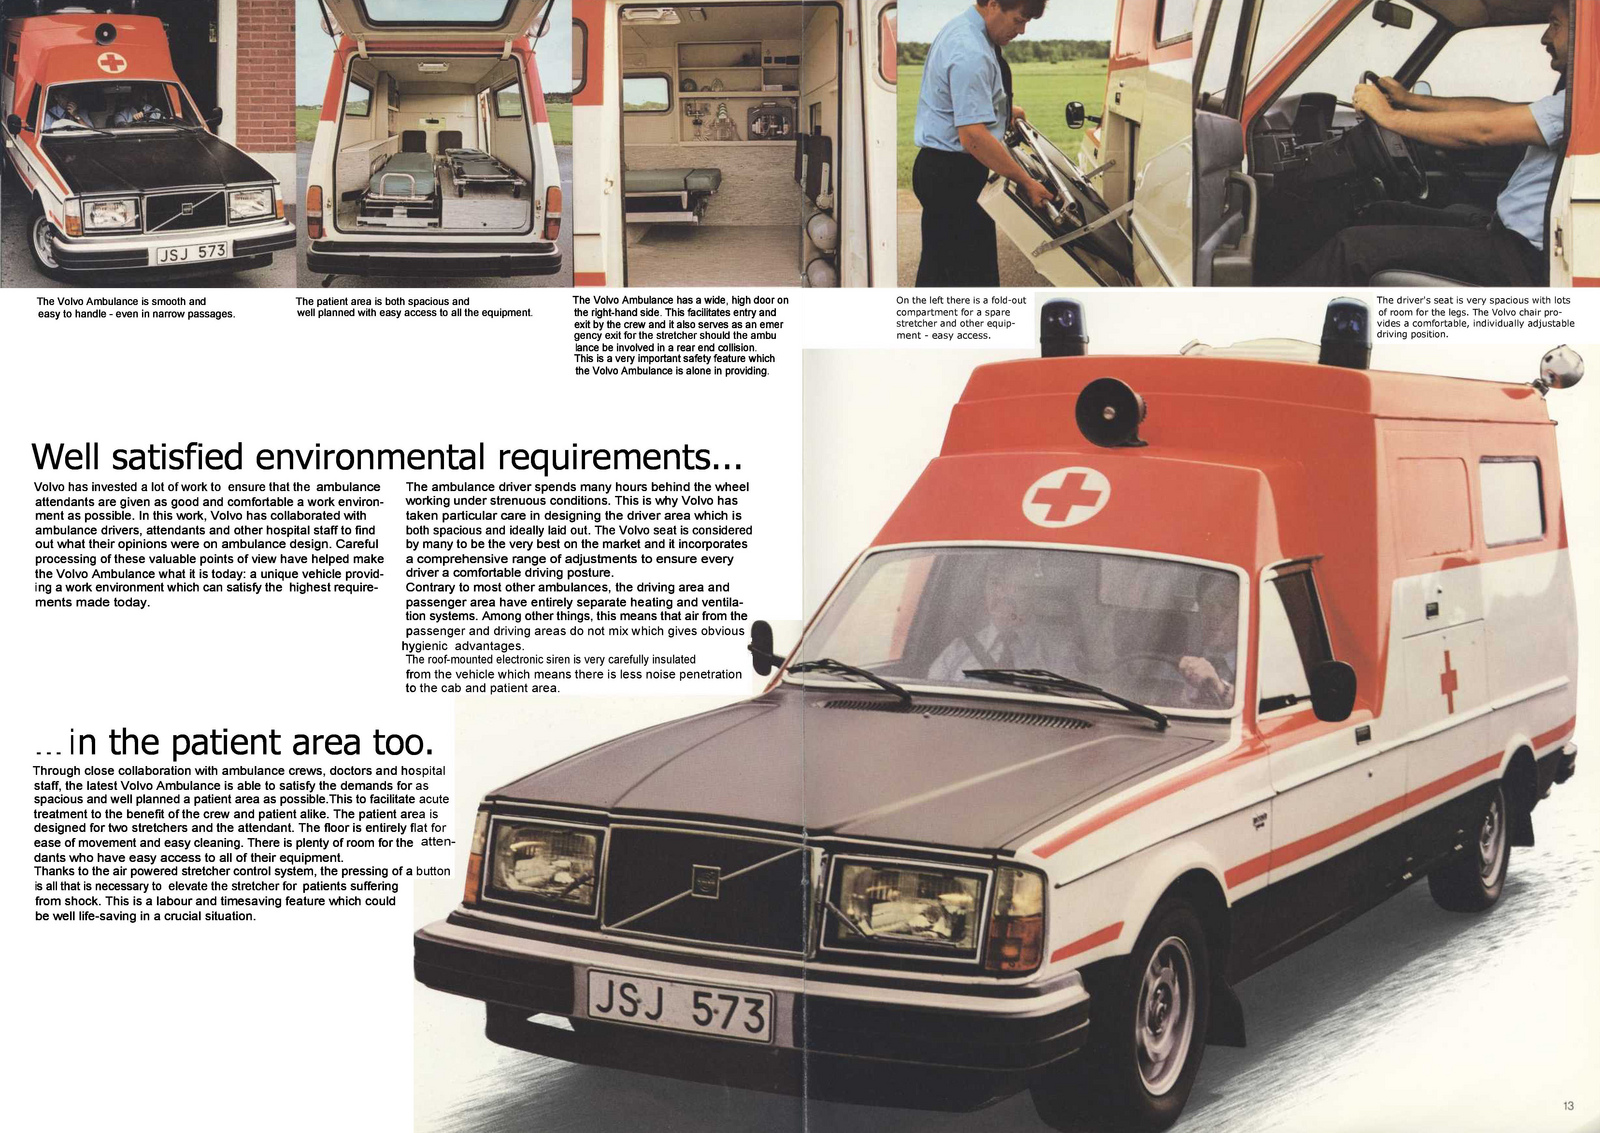 1978 240 Ambulance Ad.jpg